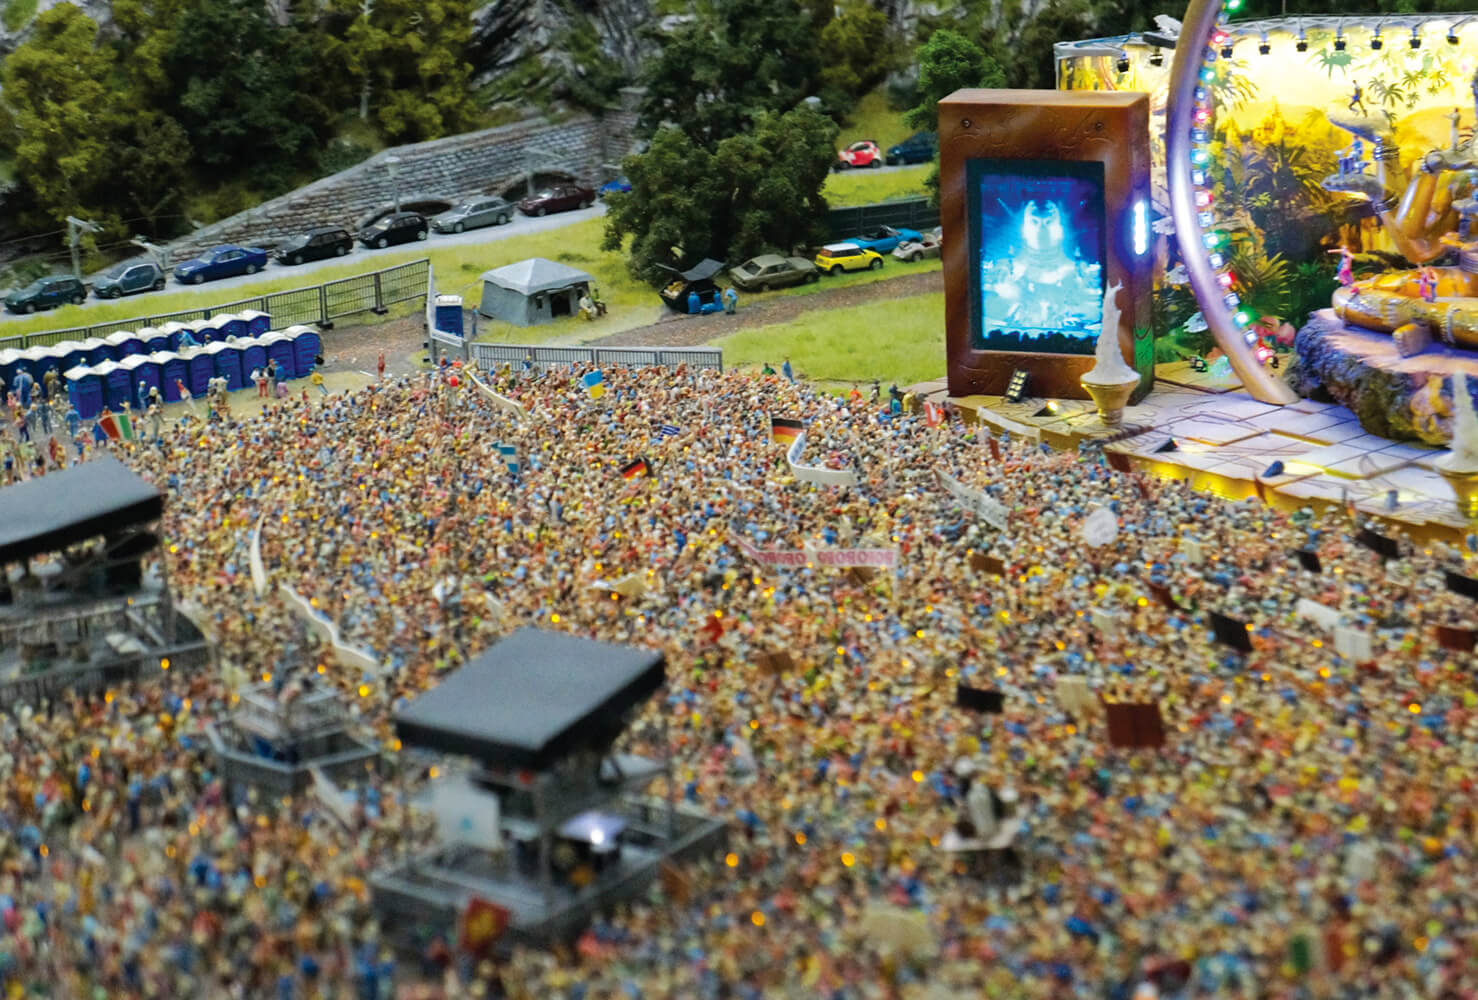 A photograph of a miniature crowd enjoying a concert at the Miniatur Wunderland.